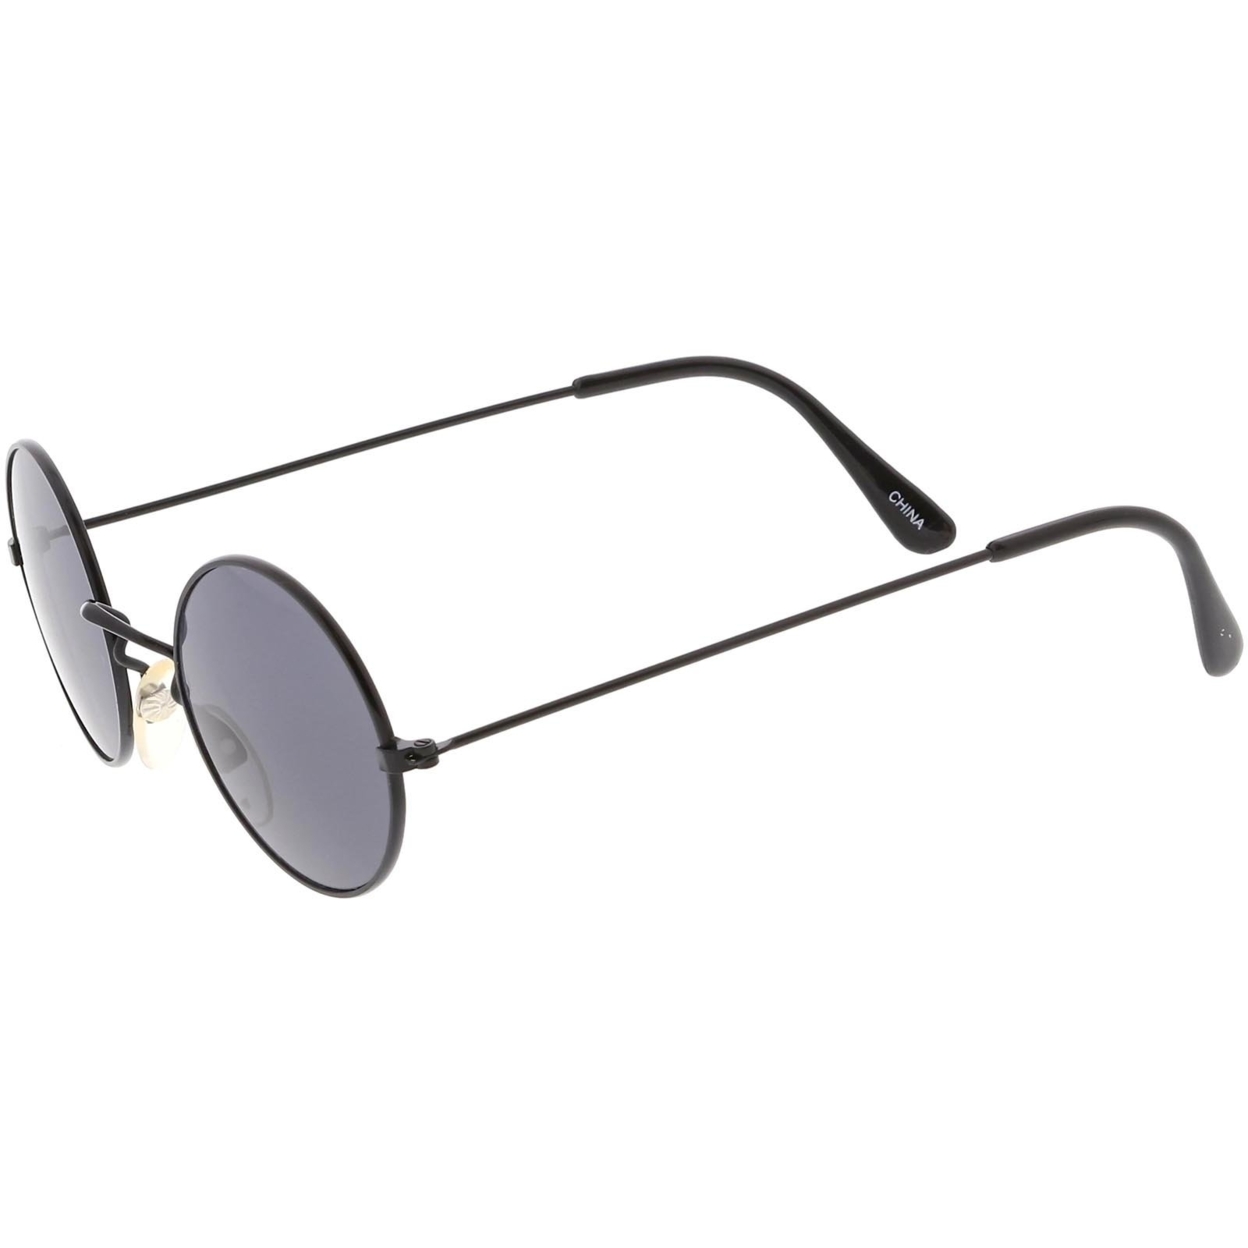 True Vintage Small Thin Frame Circle Sunglasses Neutral Colored Lens 42mm - Black / Smoke